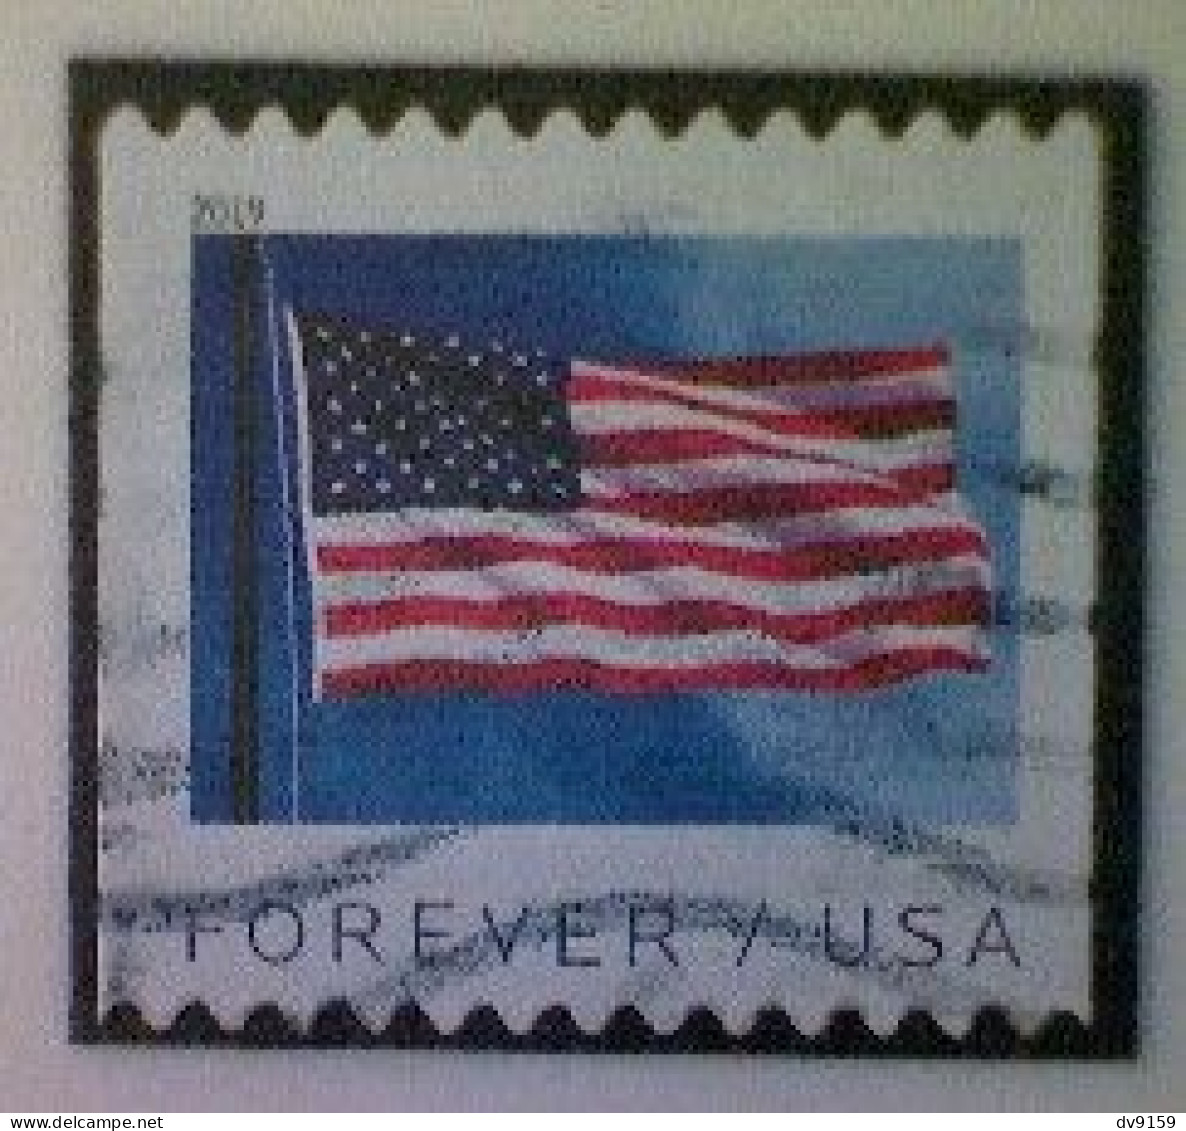 United States, Scott #5343, Used(o) Coil, 2019, Flag Definitive, (55¢) - Usati